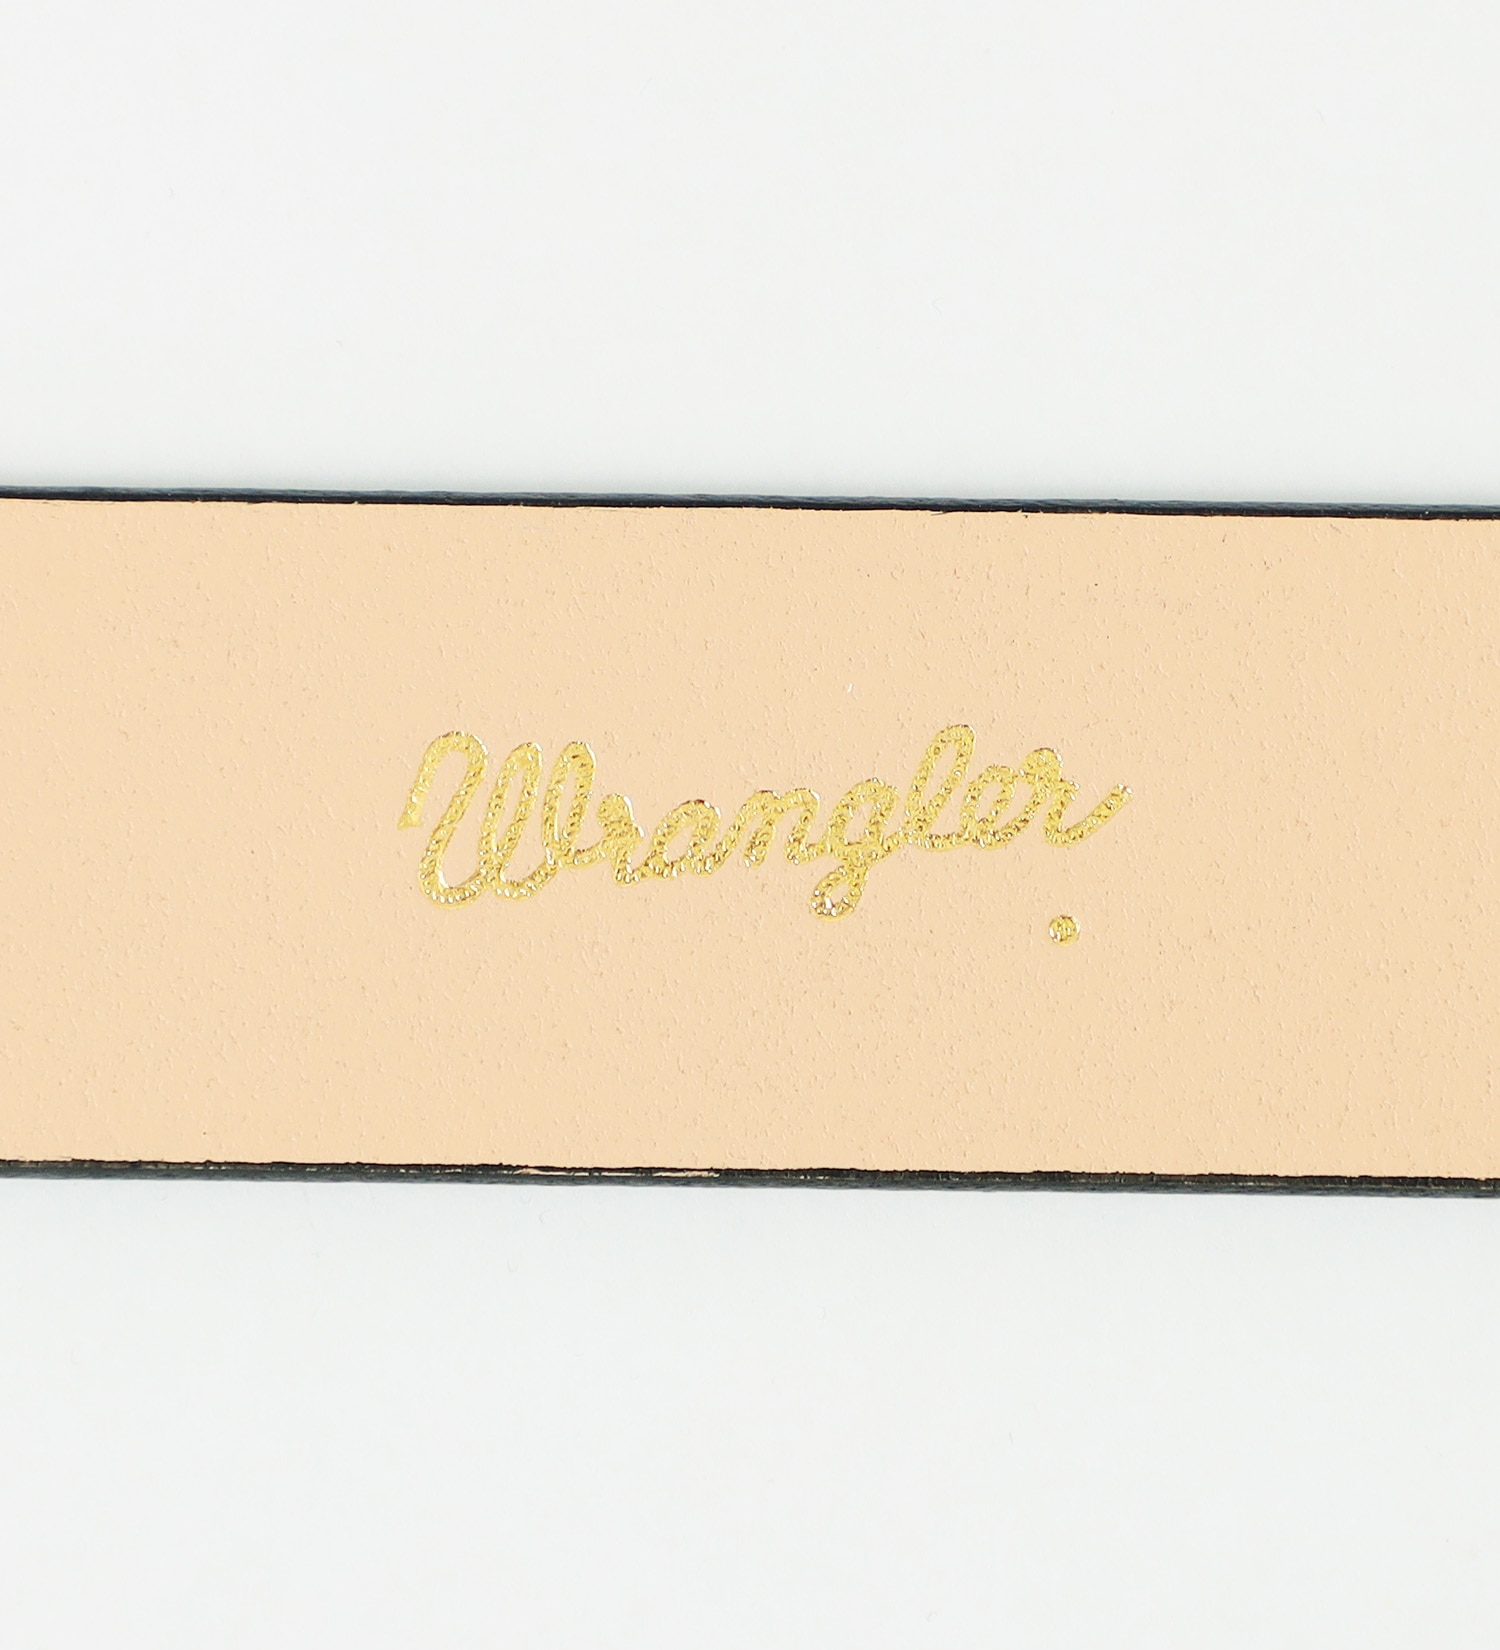 Wrangler(ラングラー)の牛革ベルト|ファッション雑貨/ベルト/メンズ|ブラック